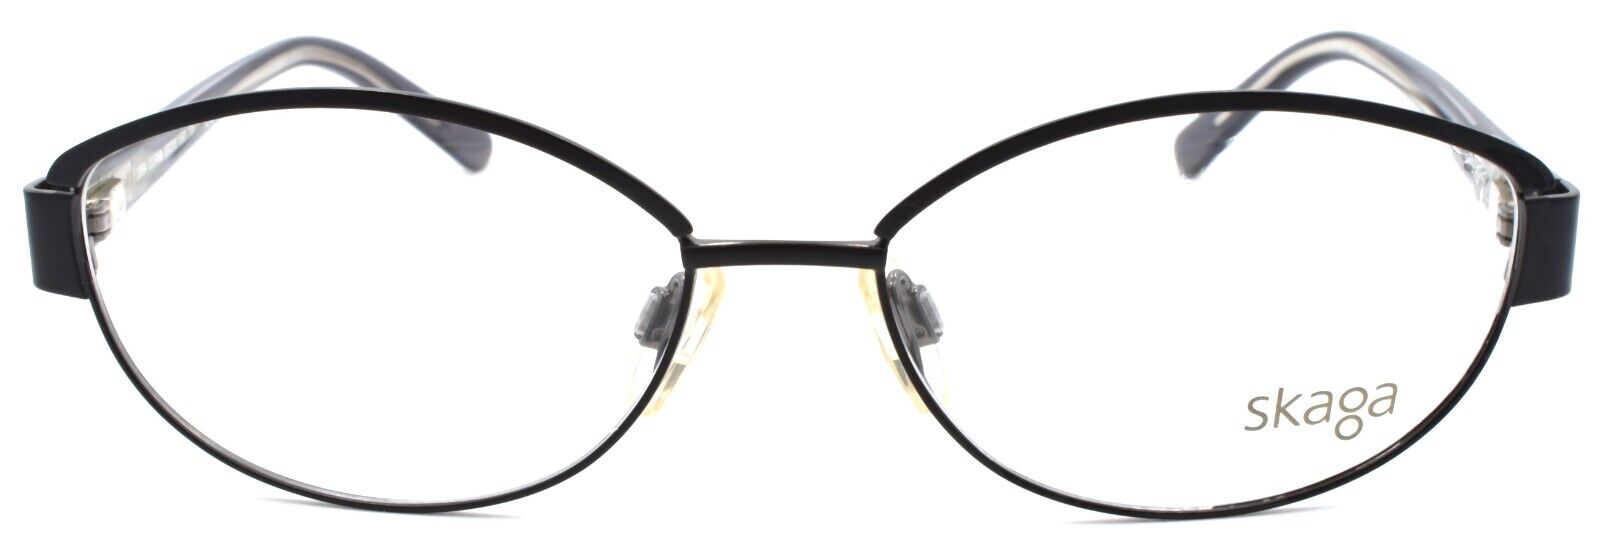 2-Skaga 3854 Ulrika 5501 Women's Eyeglasses Frames 53-15-135 Matte Black-Does not apply-IKSpecs